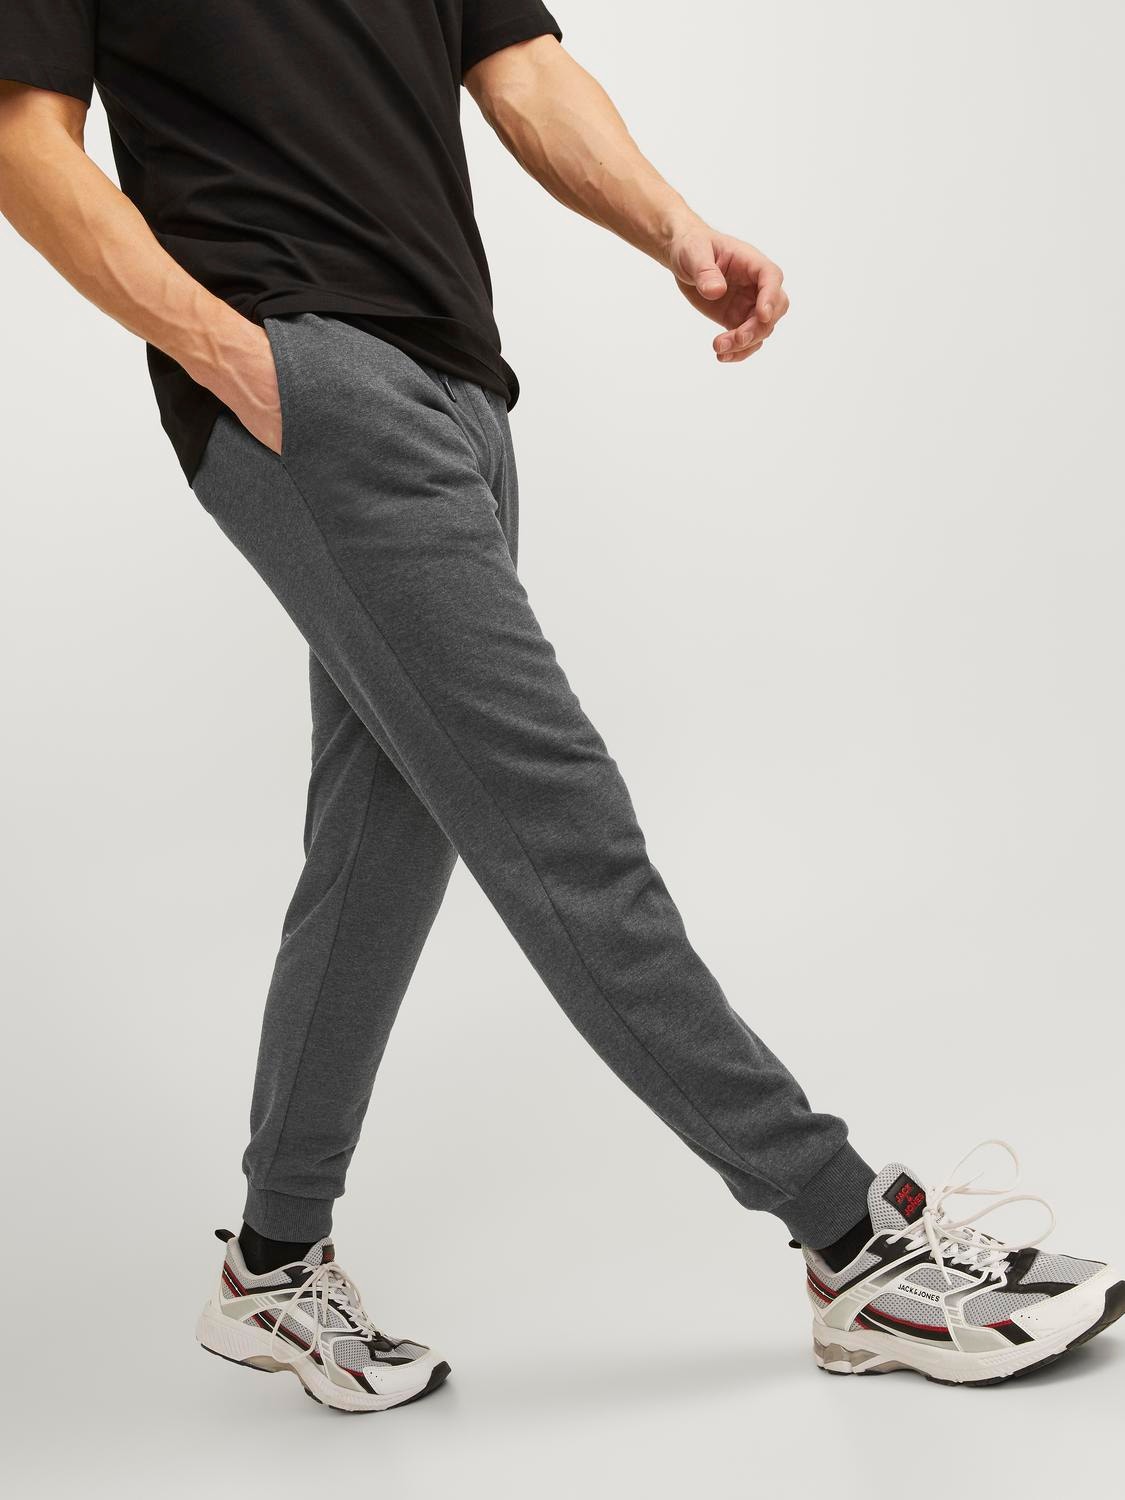 Relaxed Fit Sweatpants - Dark gray - Men